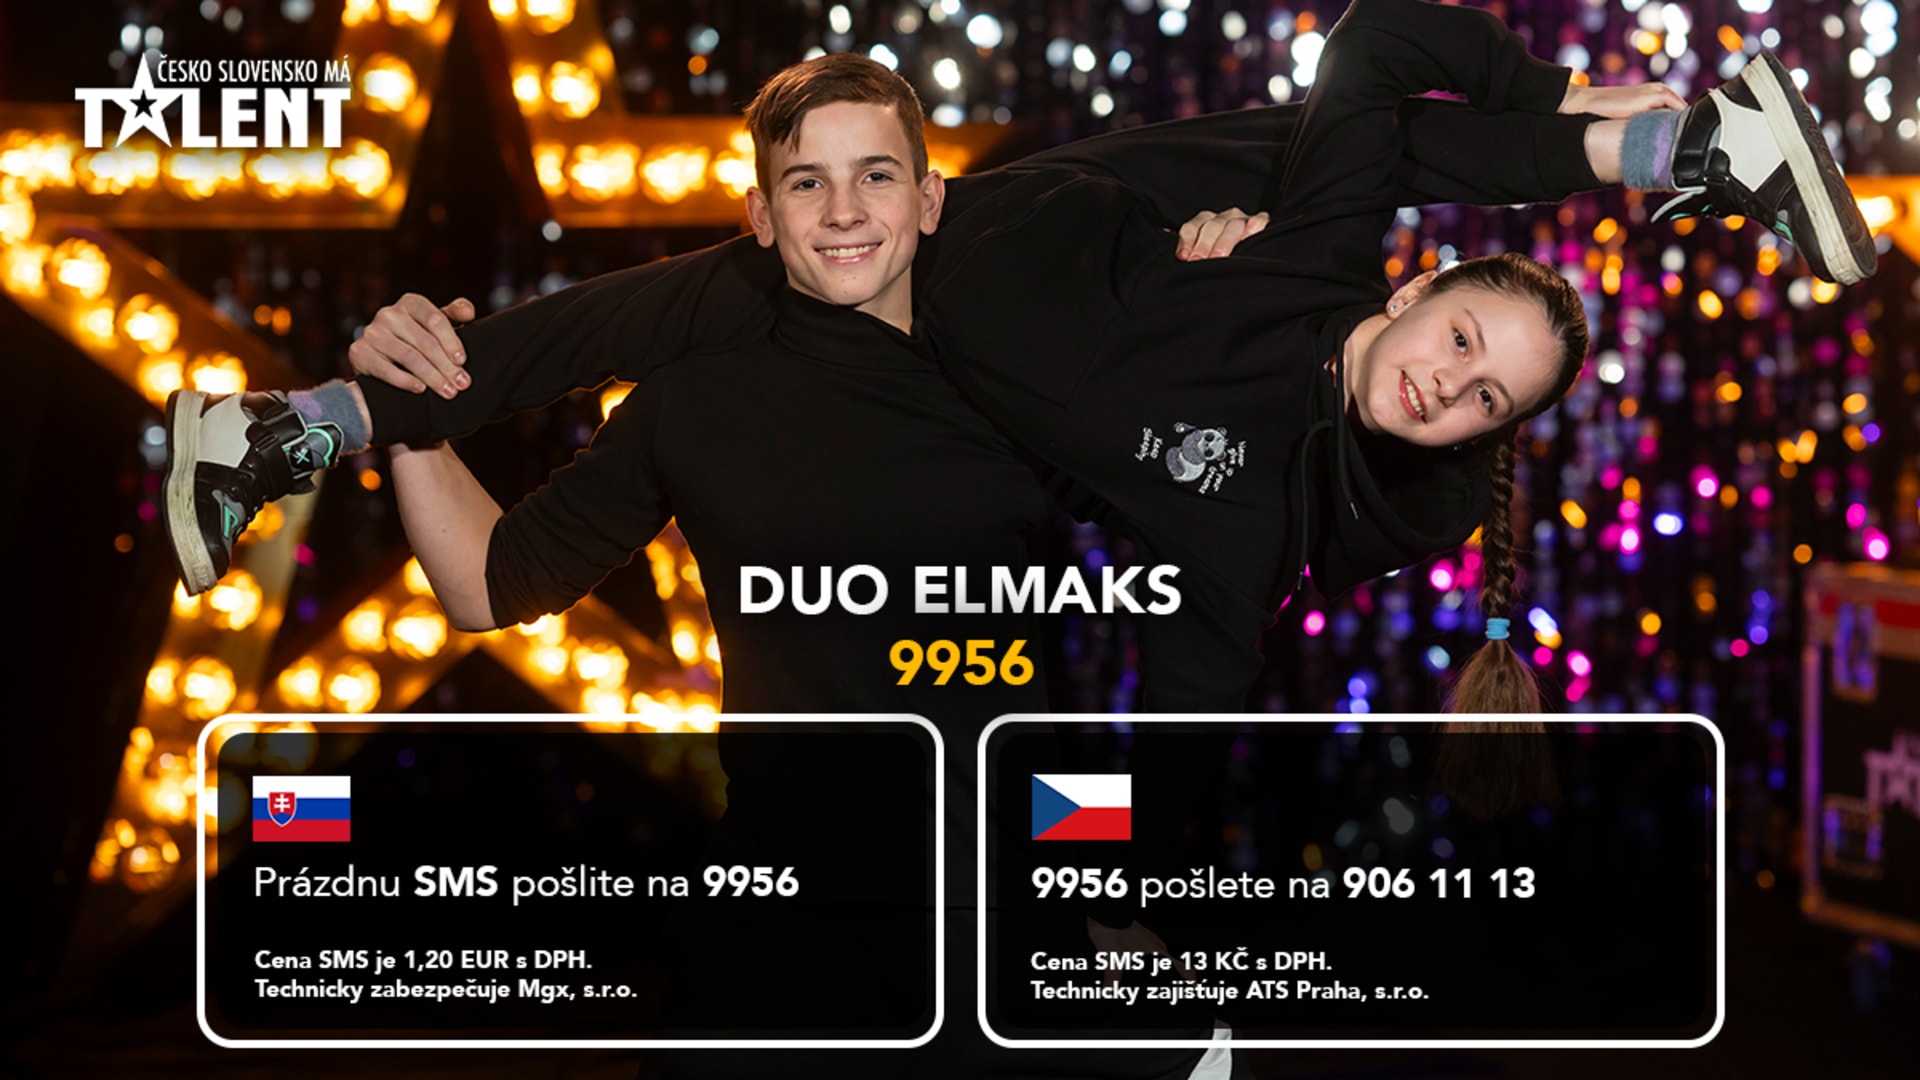 Finalisté Česko Slovensko má talent Duo ElMaks 